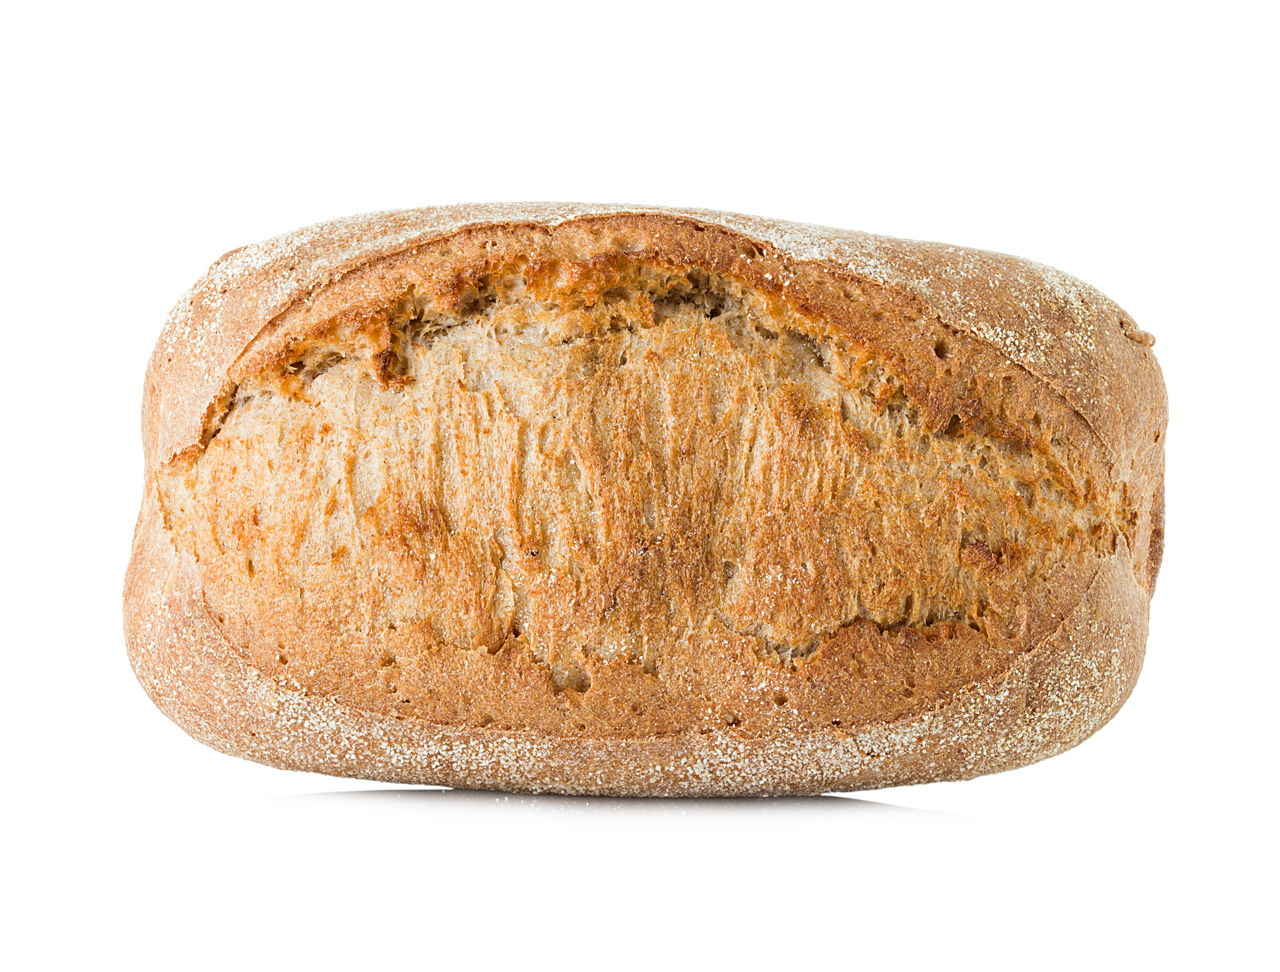 Calories in Wheat Bread